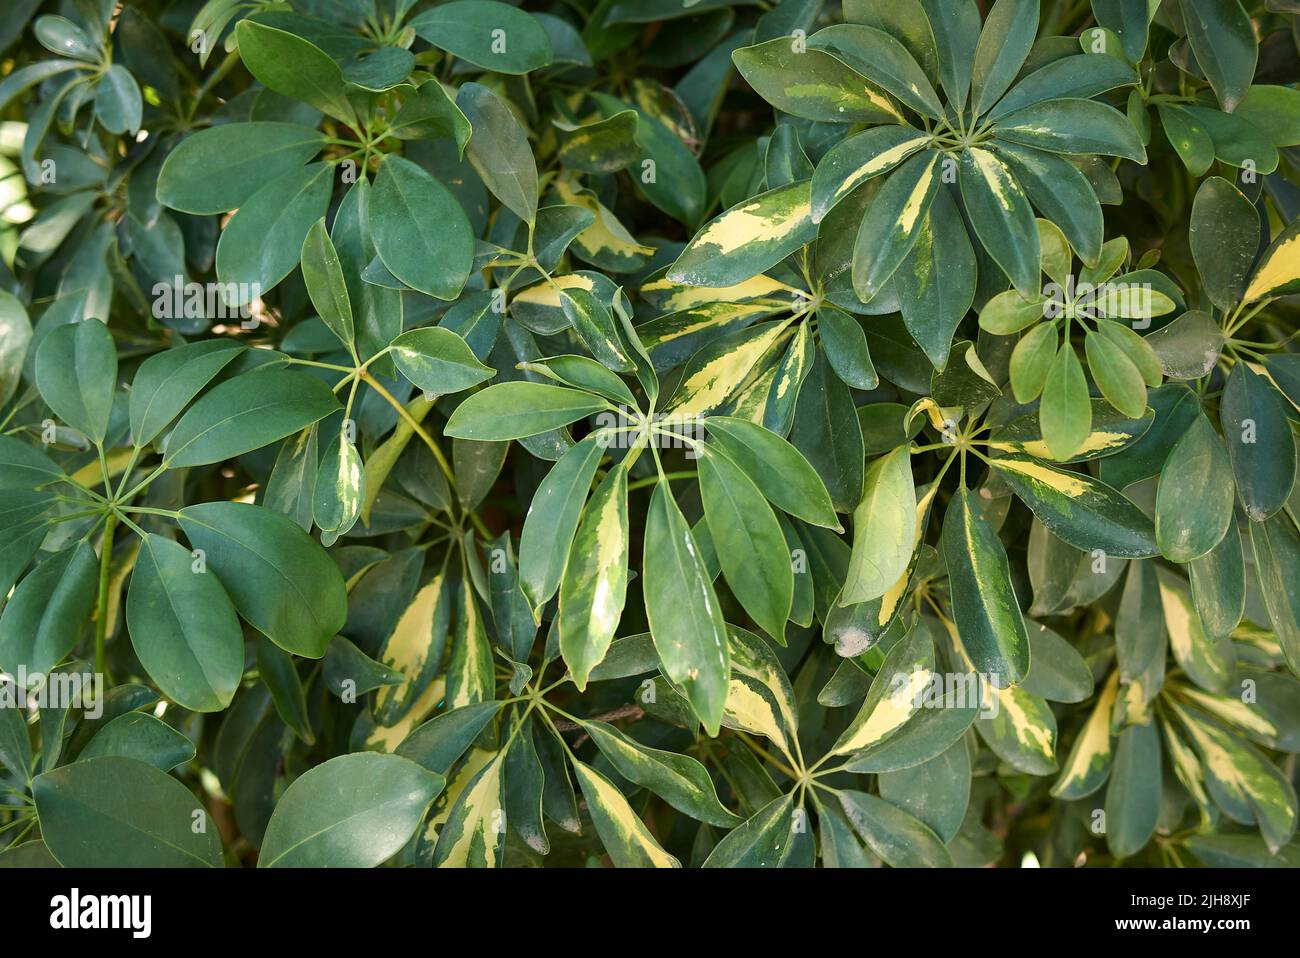 Schefflera arboricola textured foliage Stock Photo